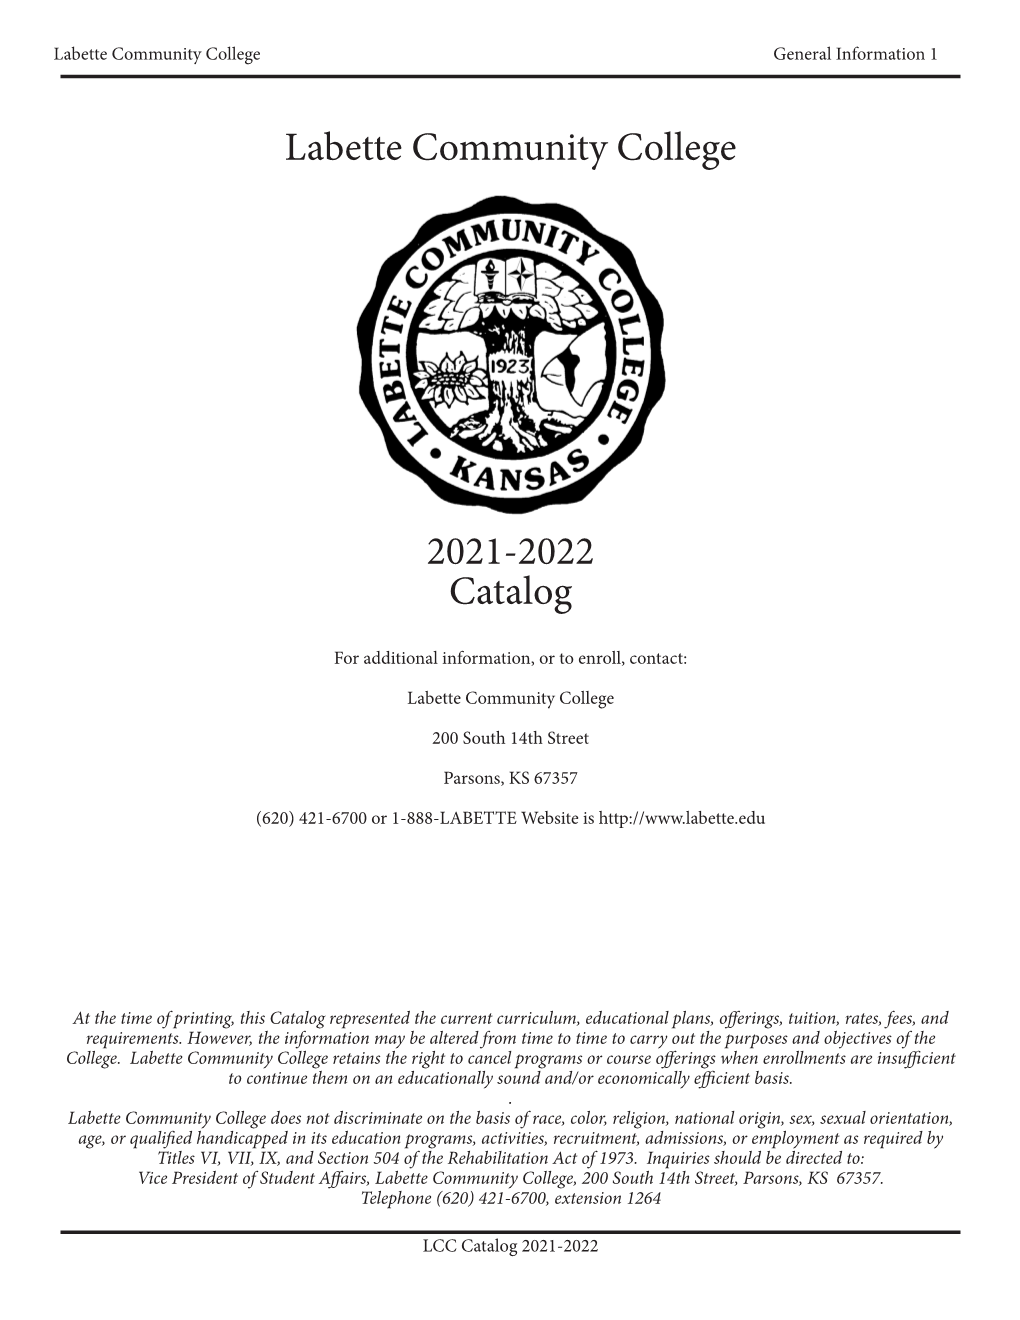 Labette Community College 2021-2022 Catalog